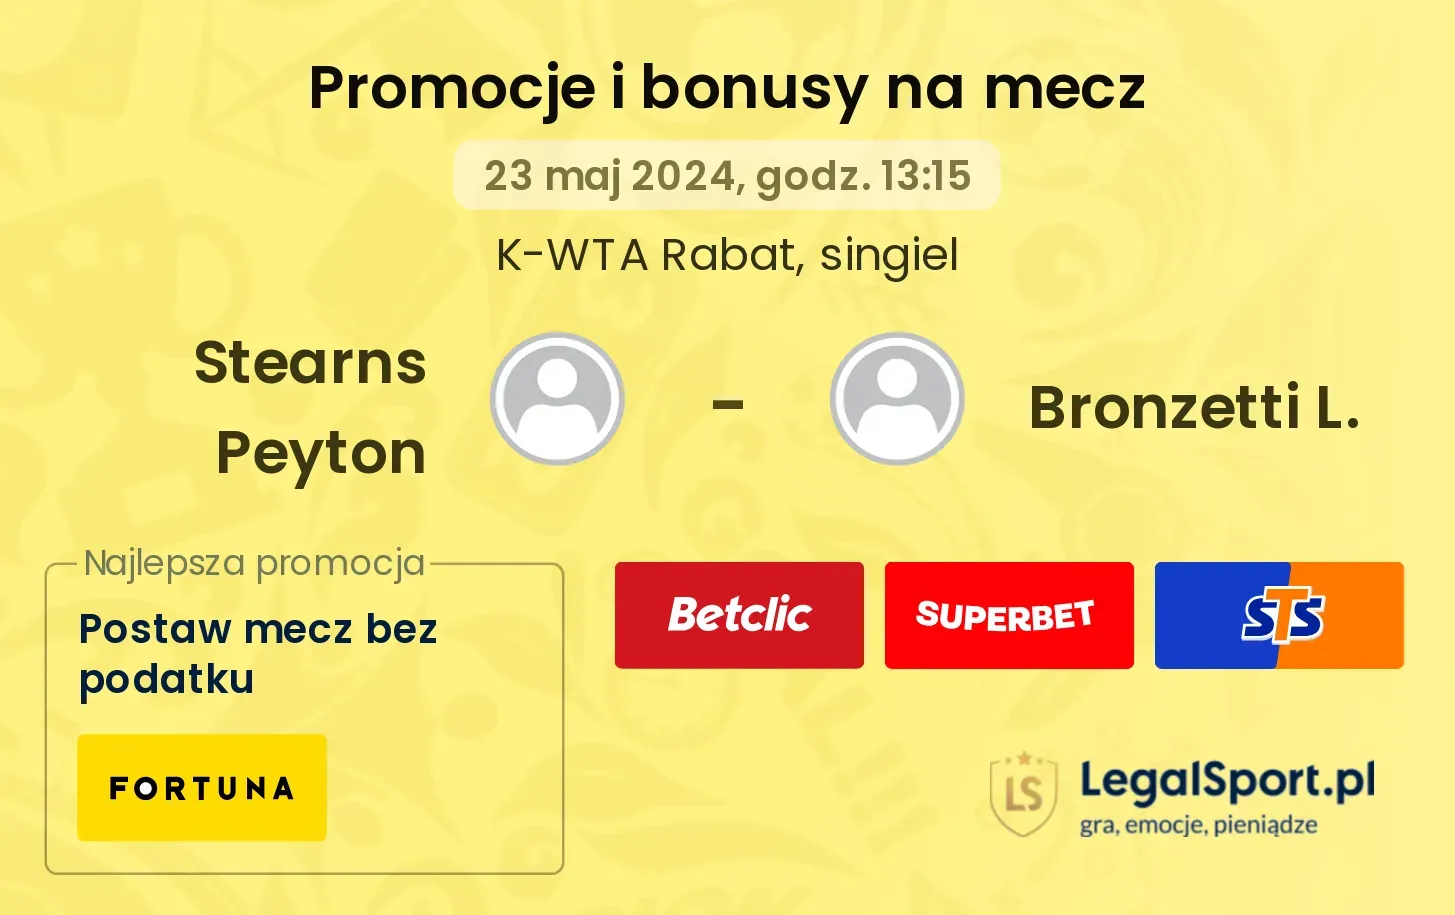 Stearns Peyton - Bronzetti L. promocje bonusy na mecz